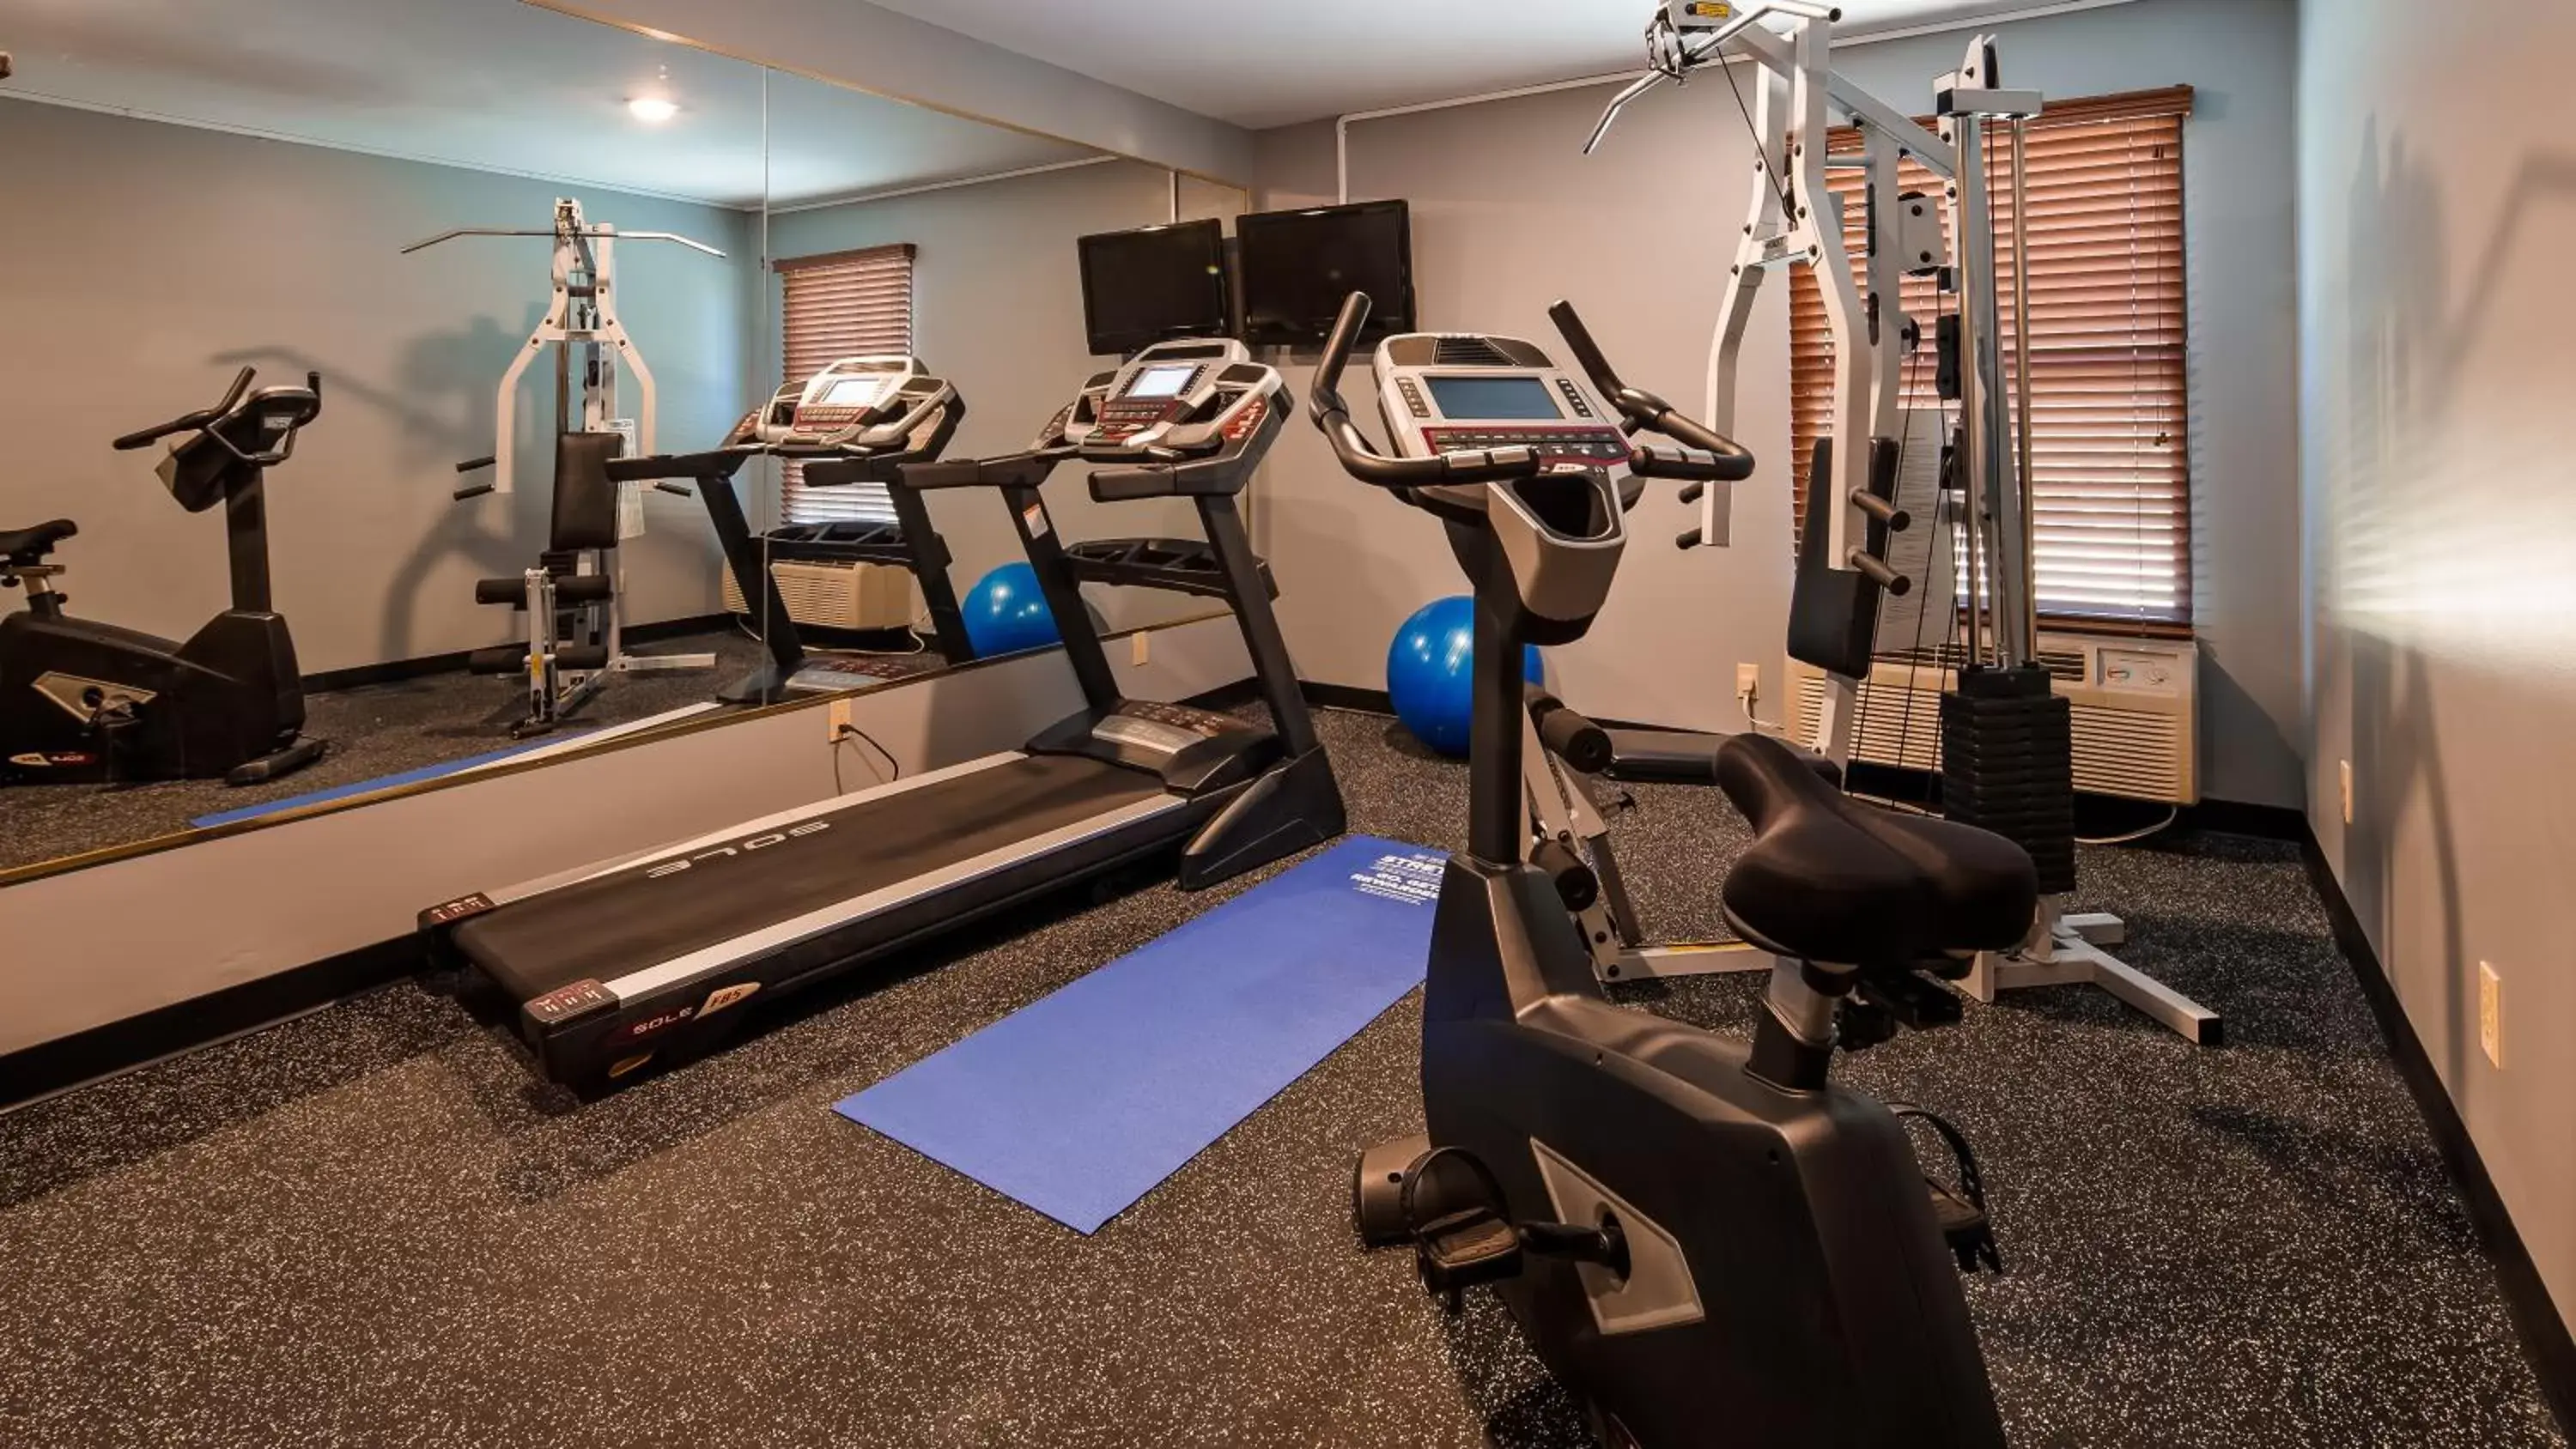 Fitness centre/facilities, Fitness Center/Facilities in Best Western Butner Creedmoor Inn